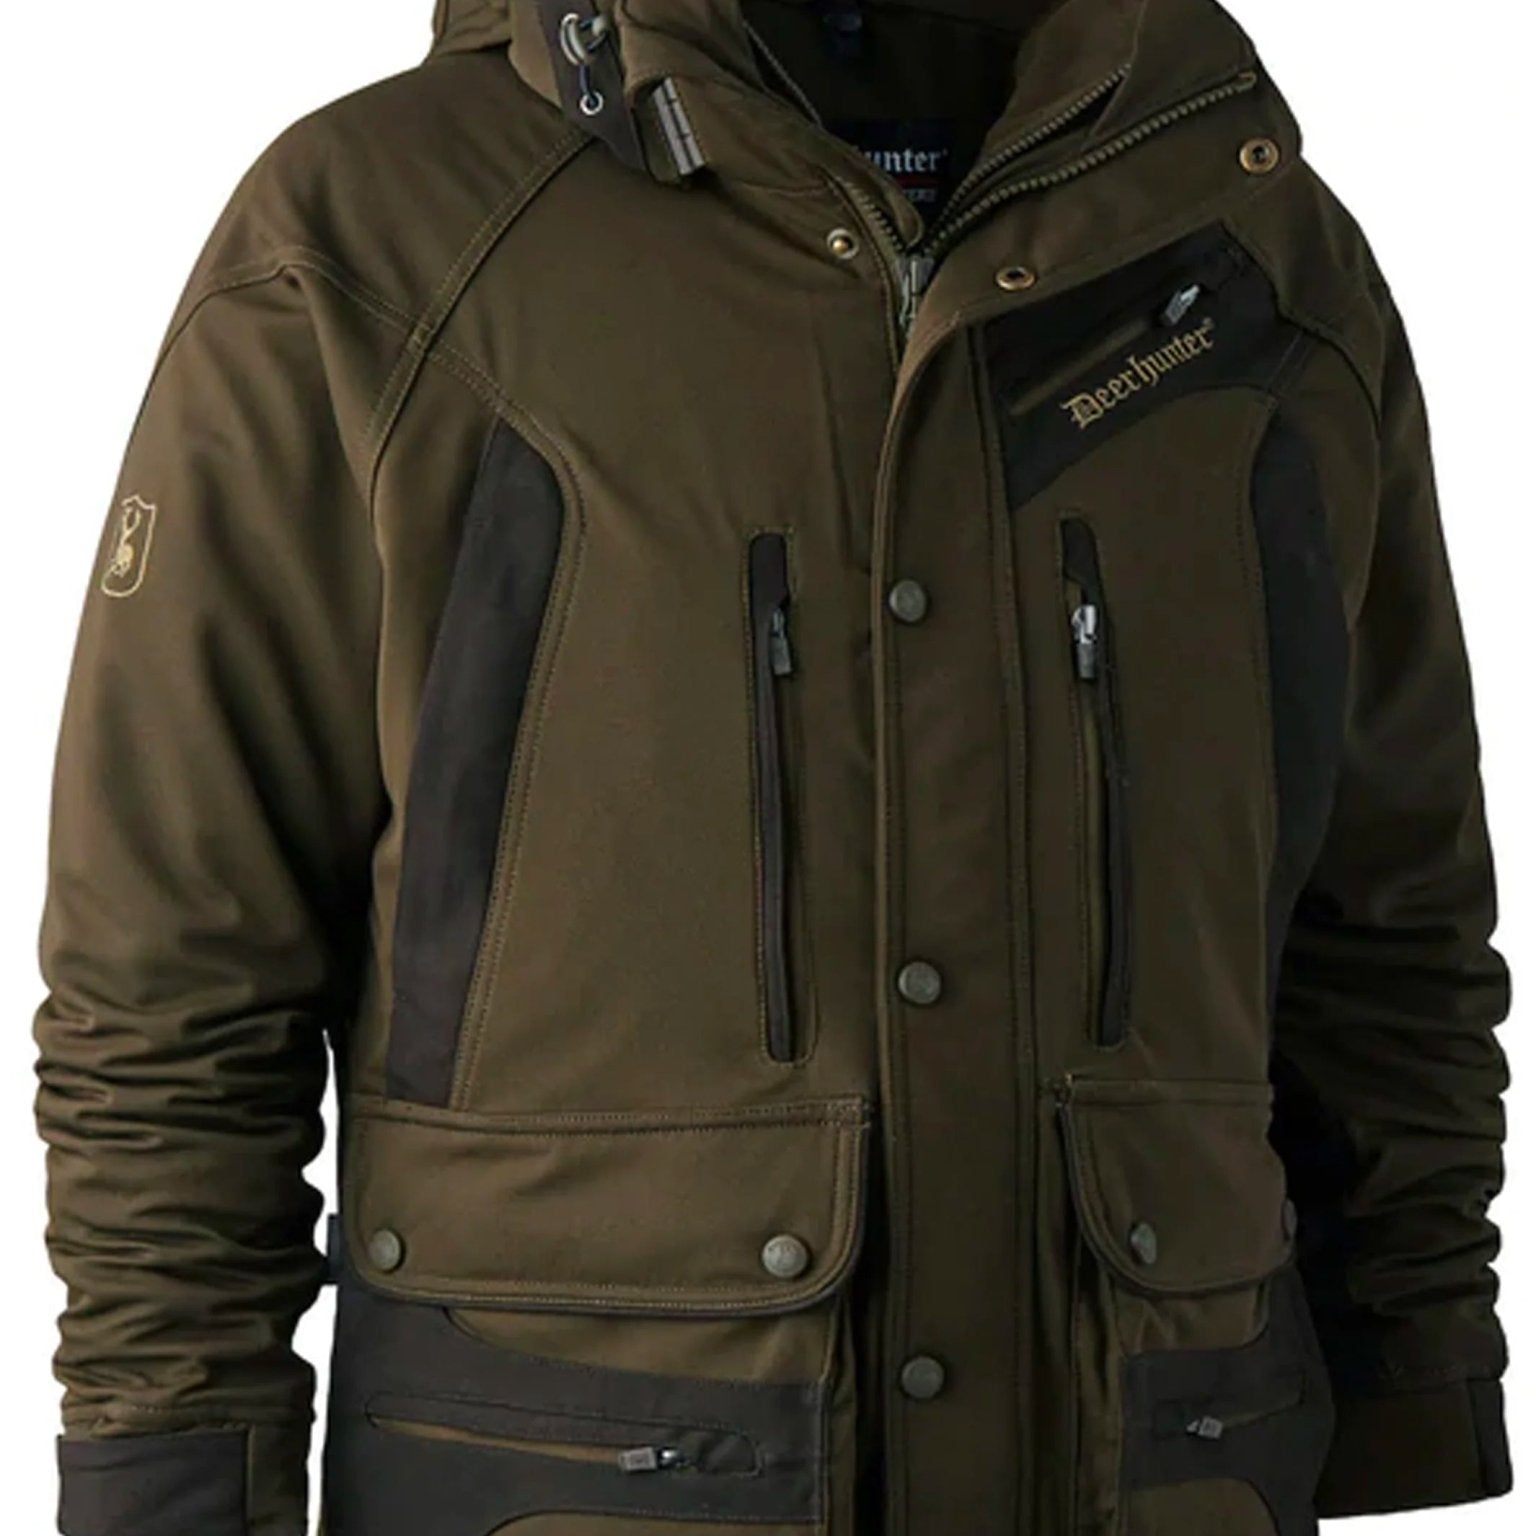 4elementsclothingDeerhunterDeerhunter - Muflon Waterproof Jacket / Coat 5822Outerwear5822-376-48